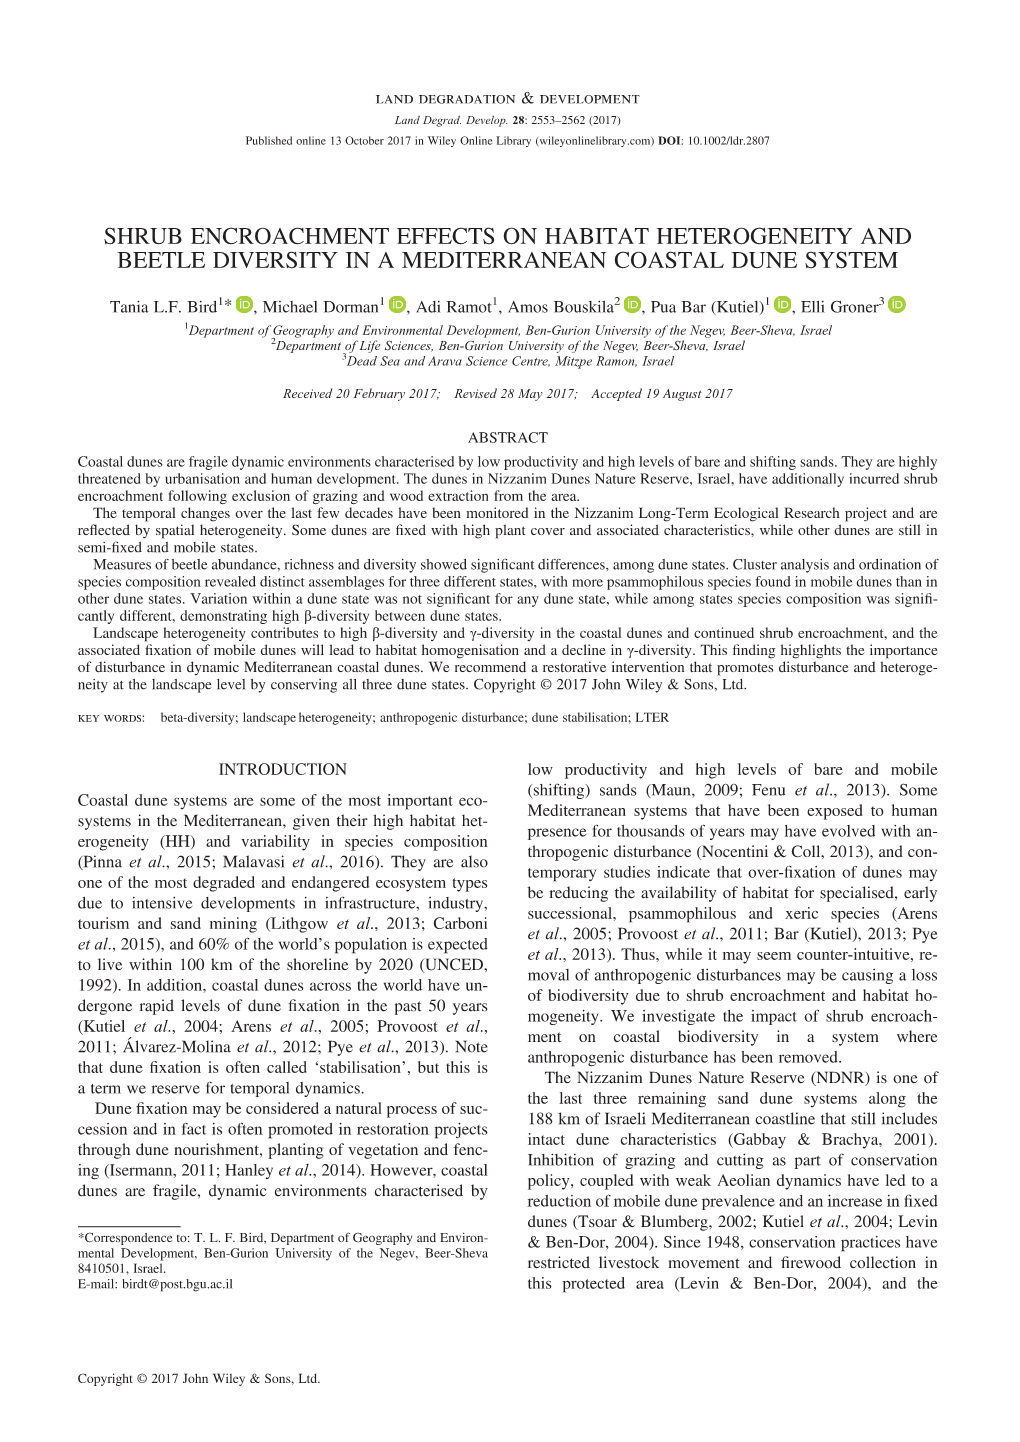 Shrub Encroachment Effects on Habitat Heterogeneity and Beetle Diversity in a Mediterranean Coastal Dune System